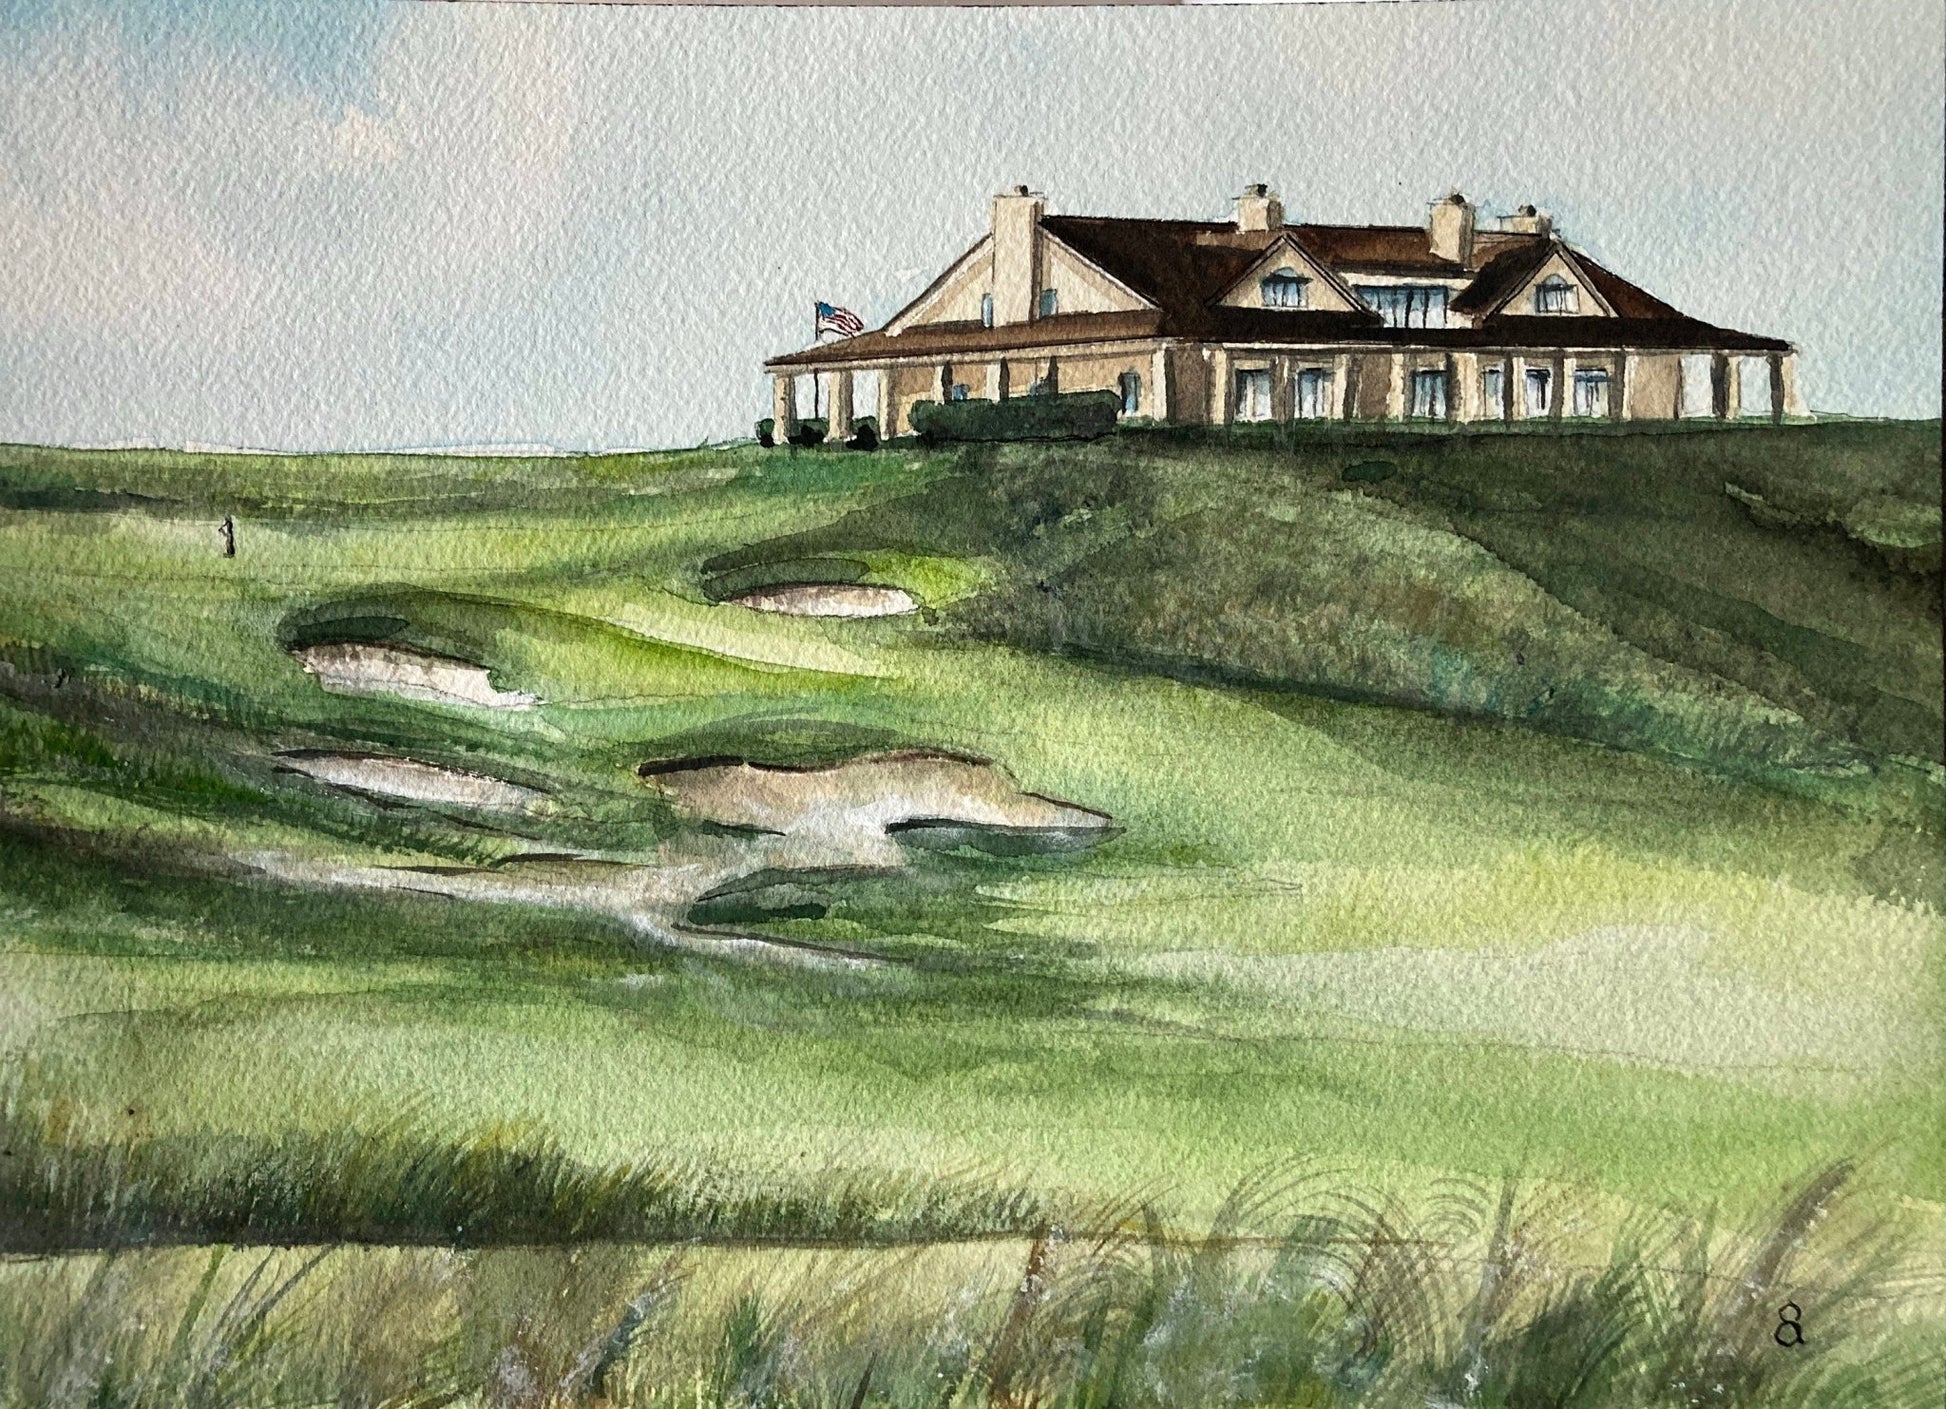 Bulls Bay Golf Club - Riverlight Art Studio